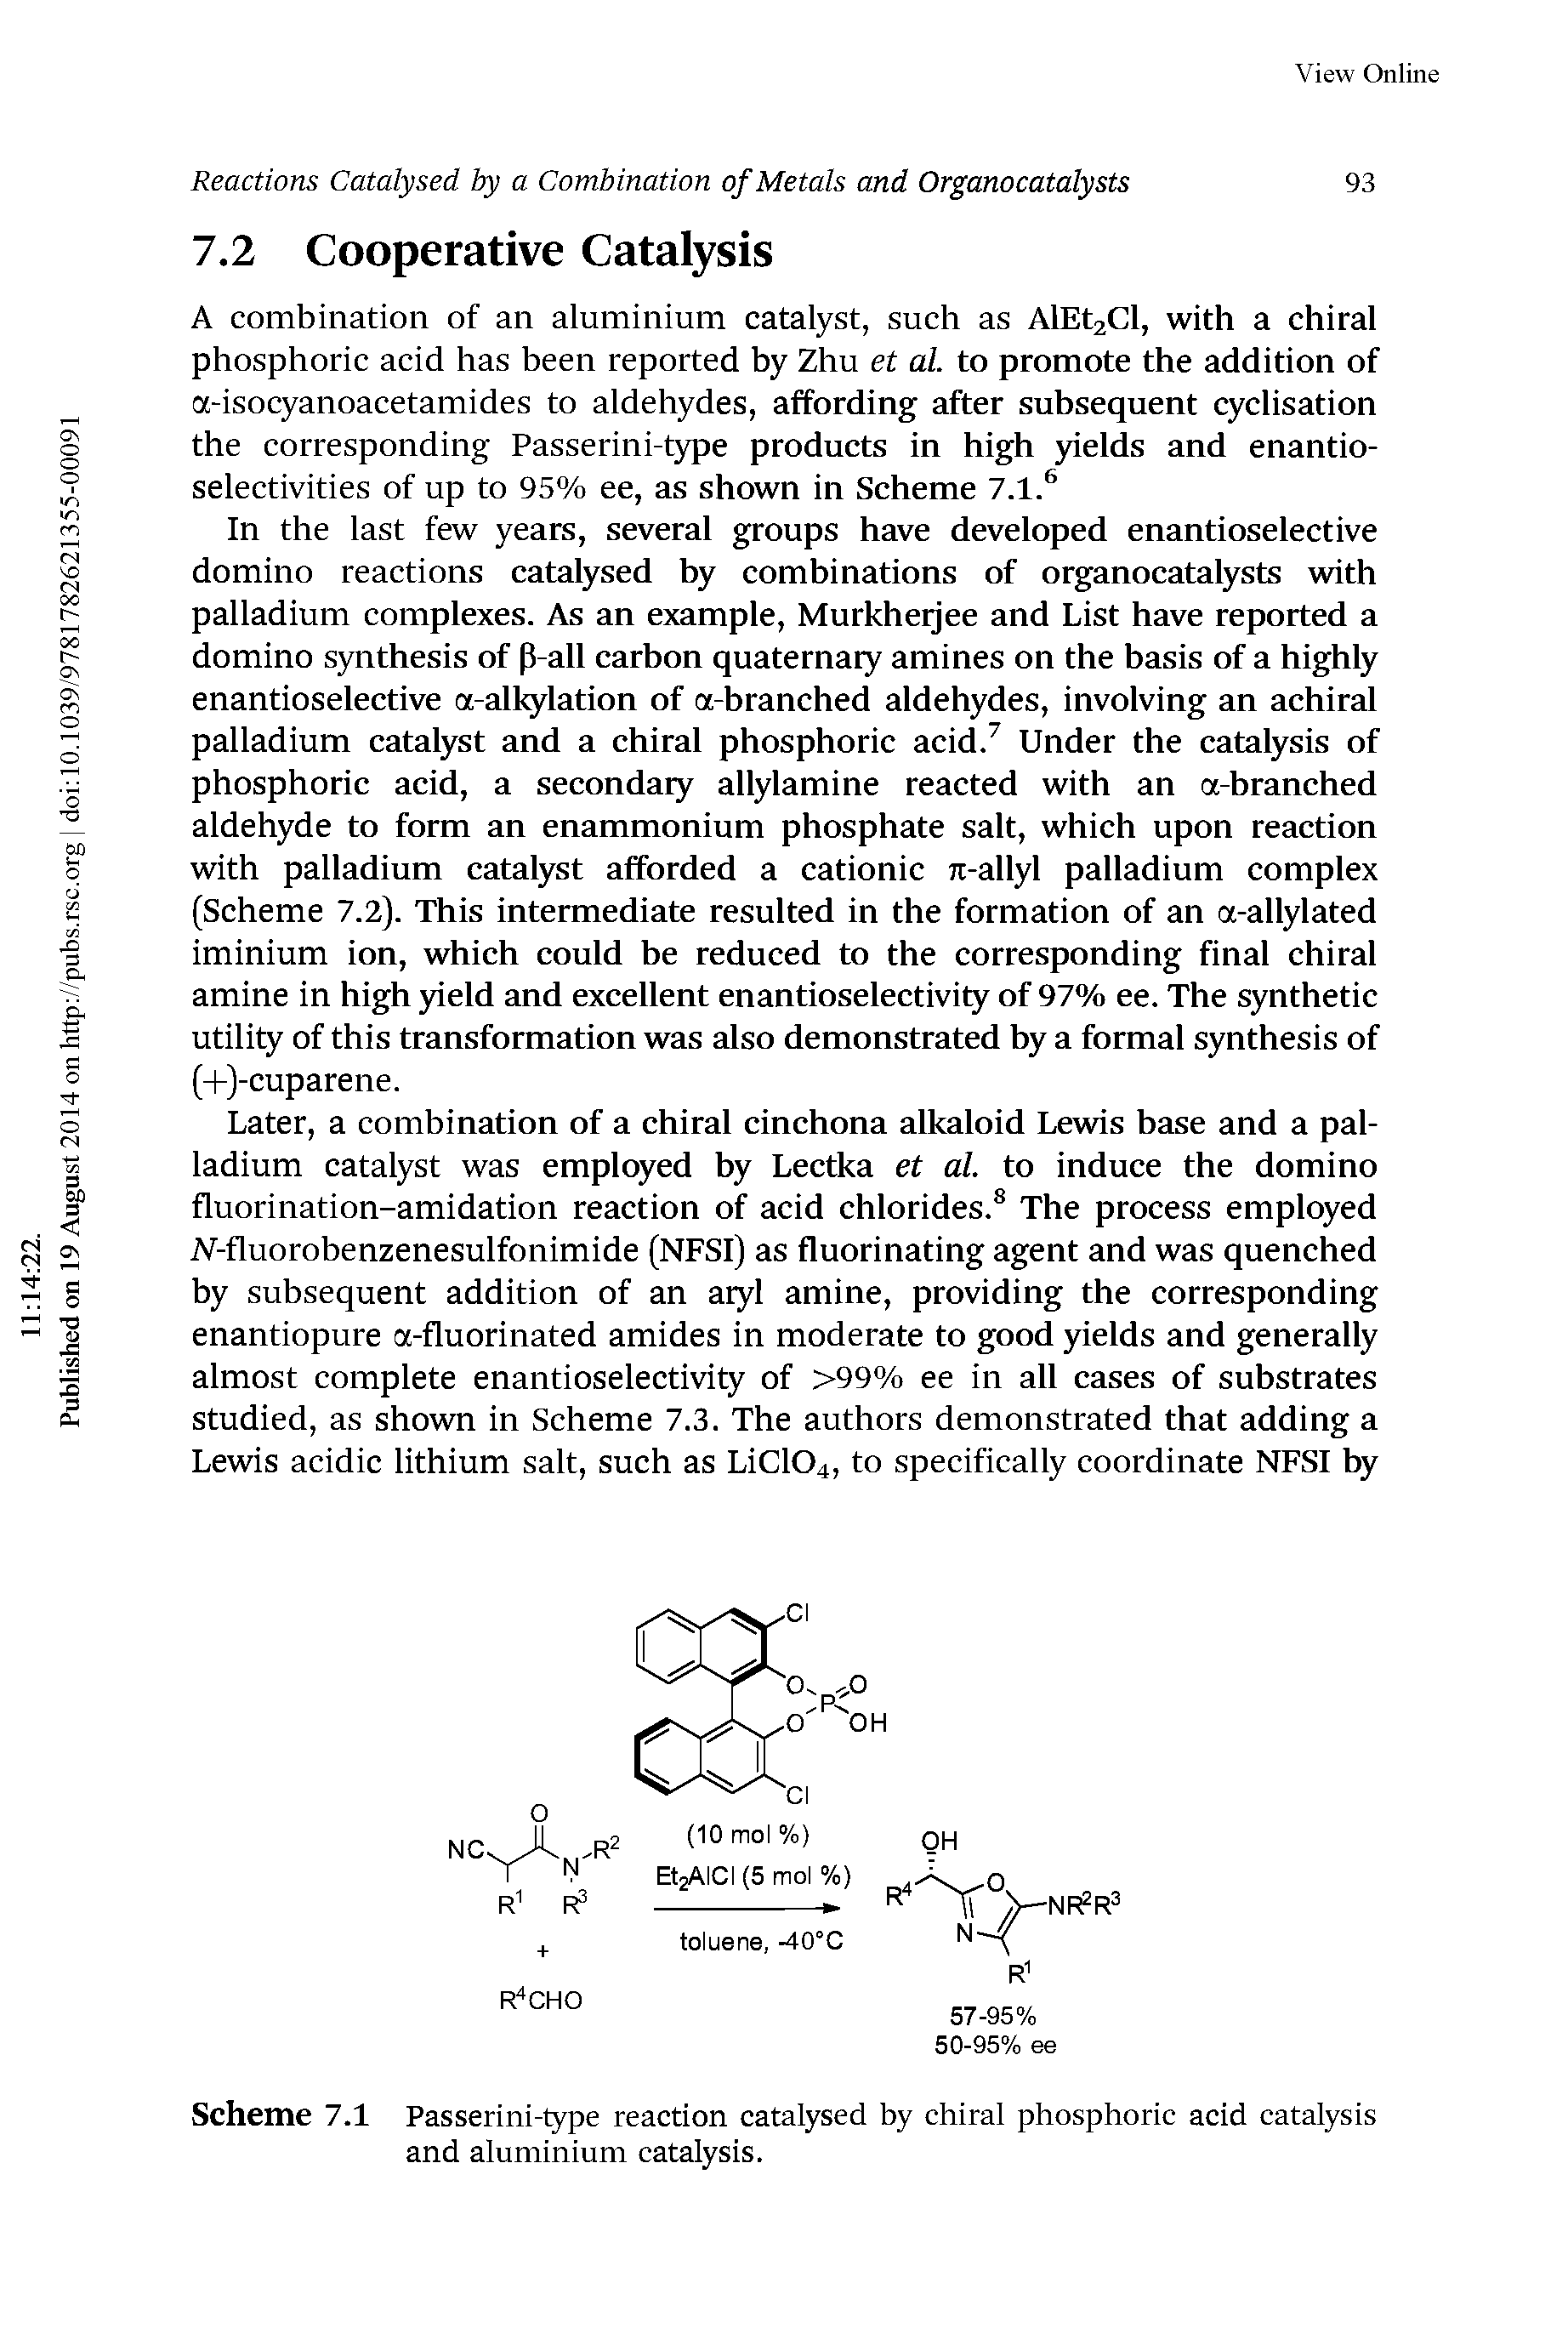 Scheme 7.1 Passerini-type reaction catalysed by chiral phosphoric acid catalysis and aluminium catalysis.